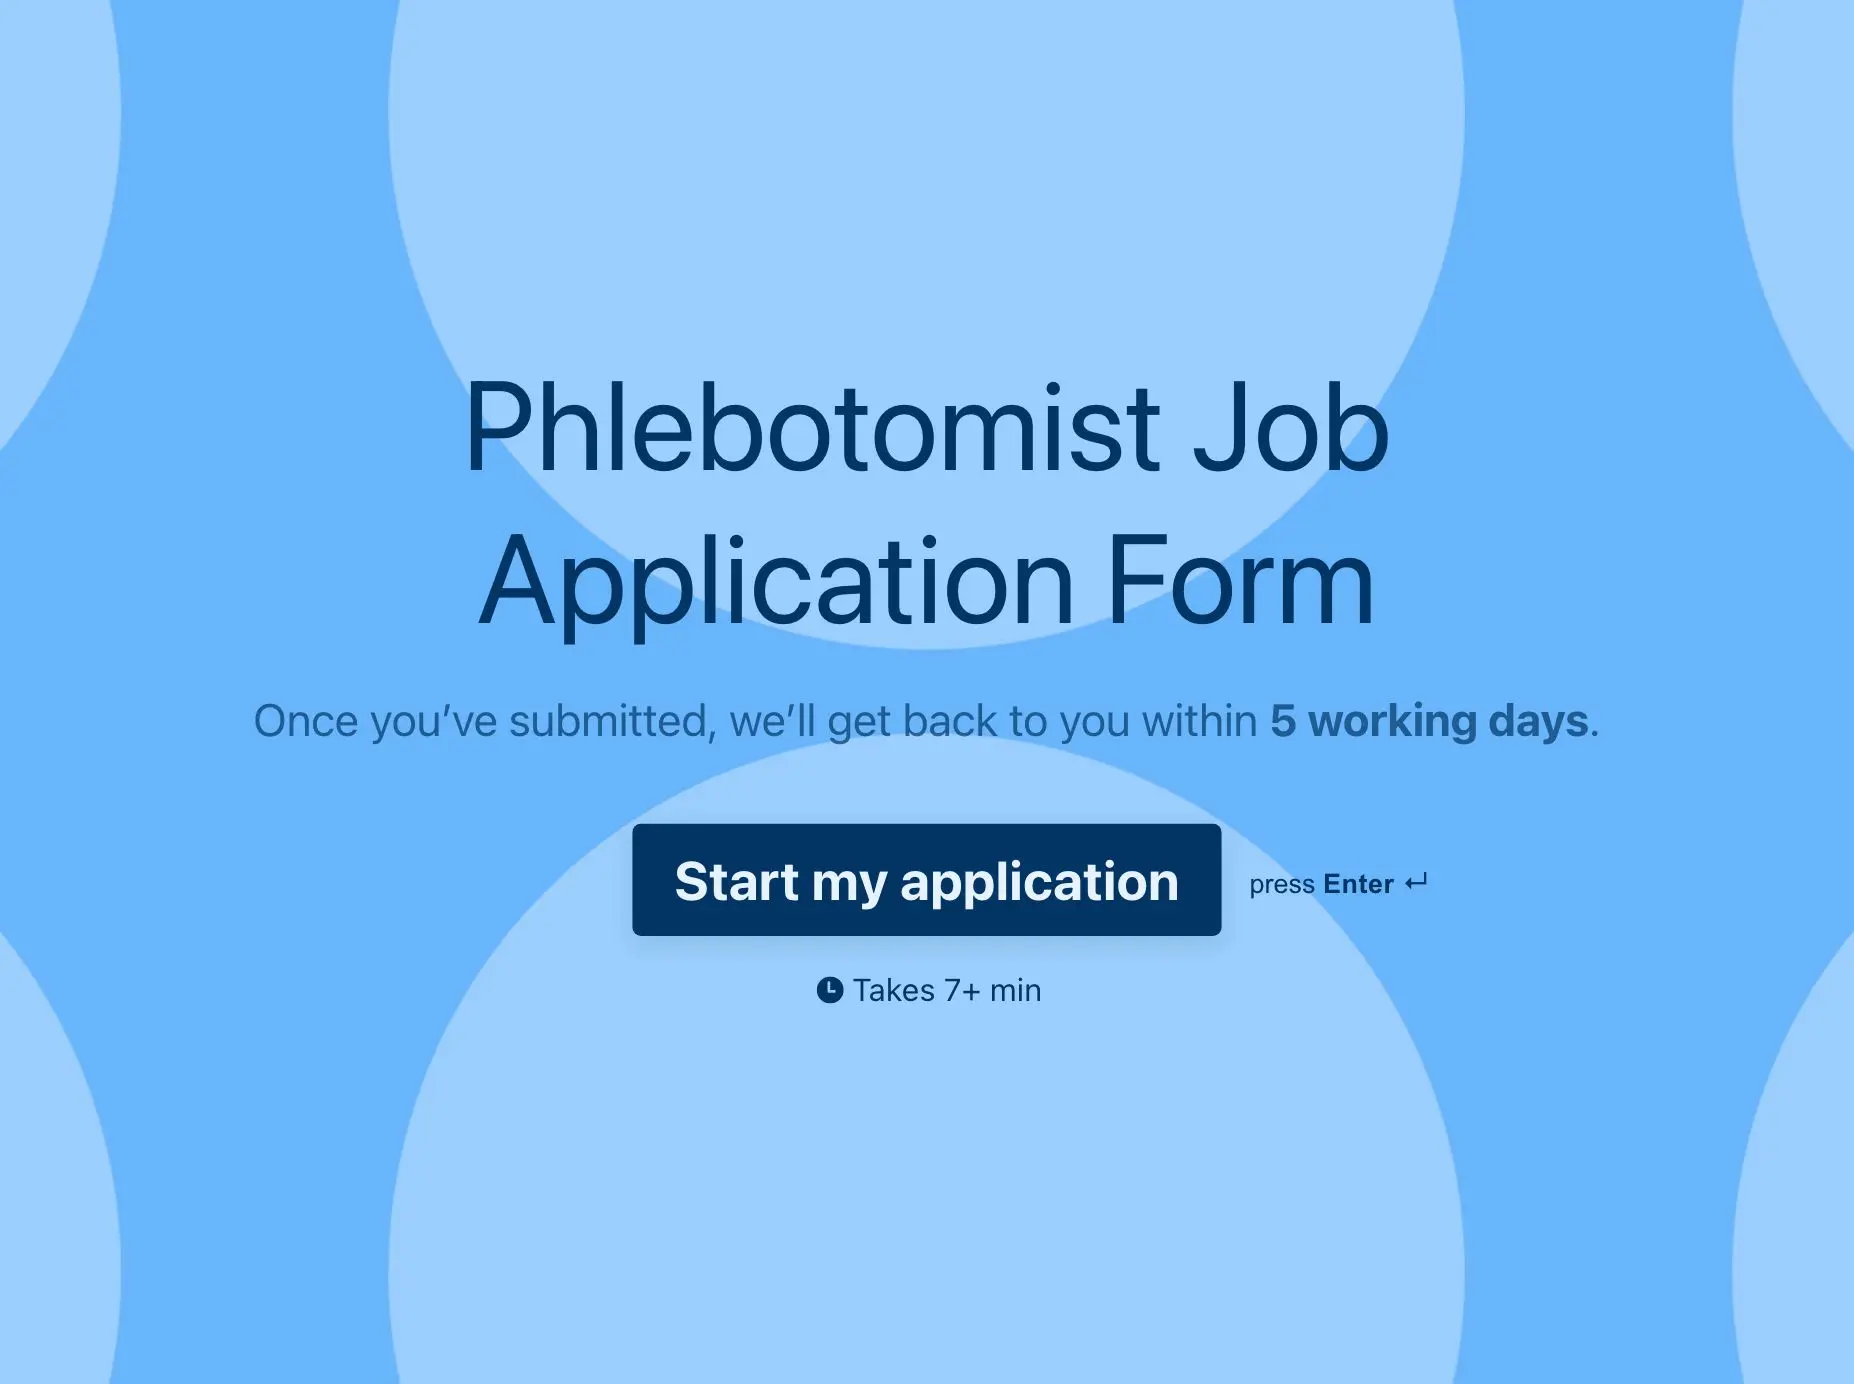 Phlebotomist Job Application Form Template Hero